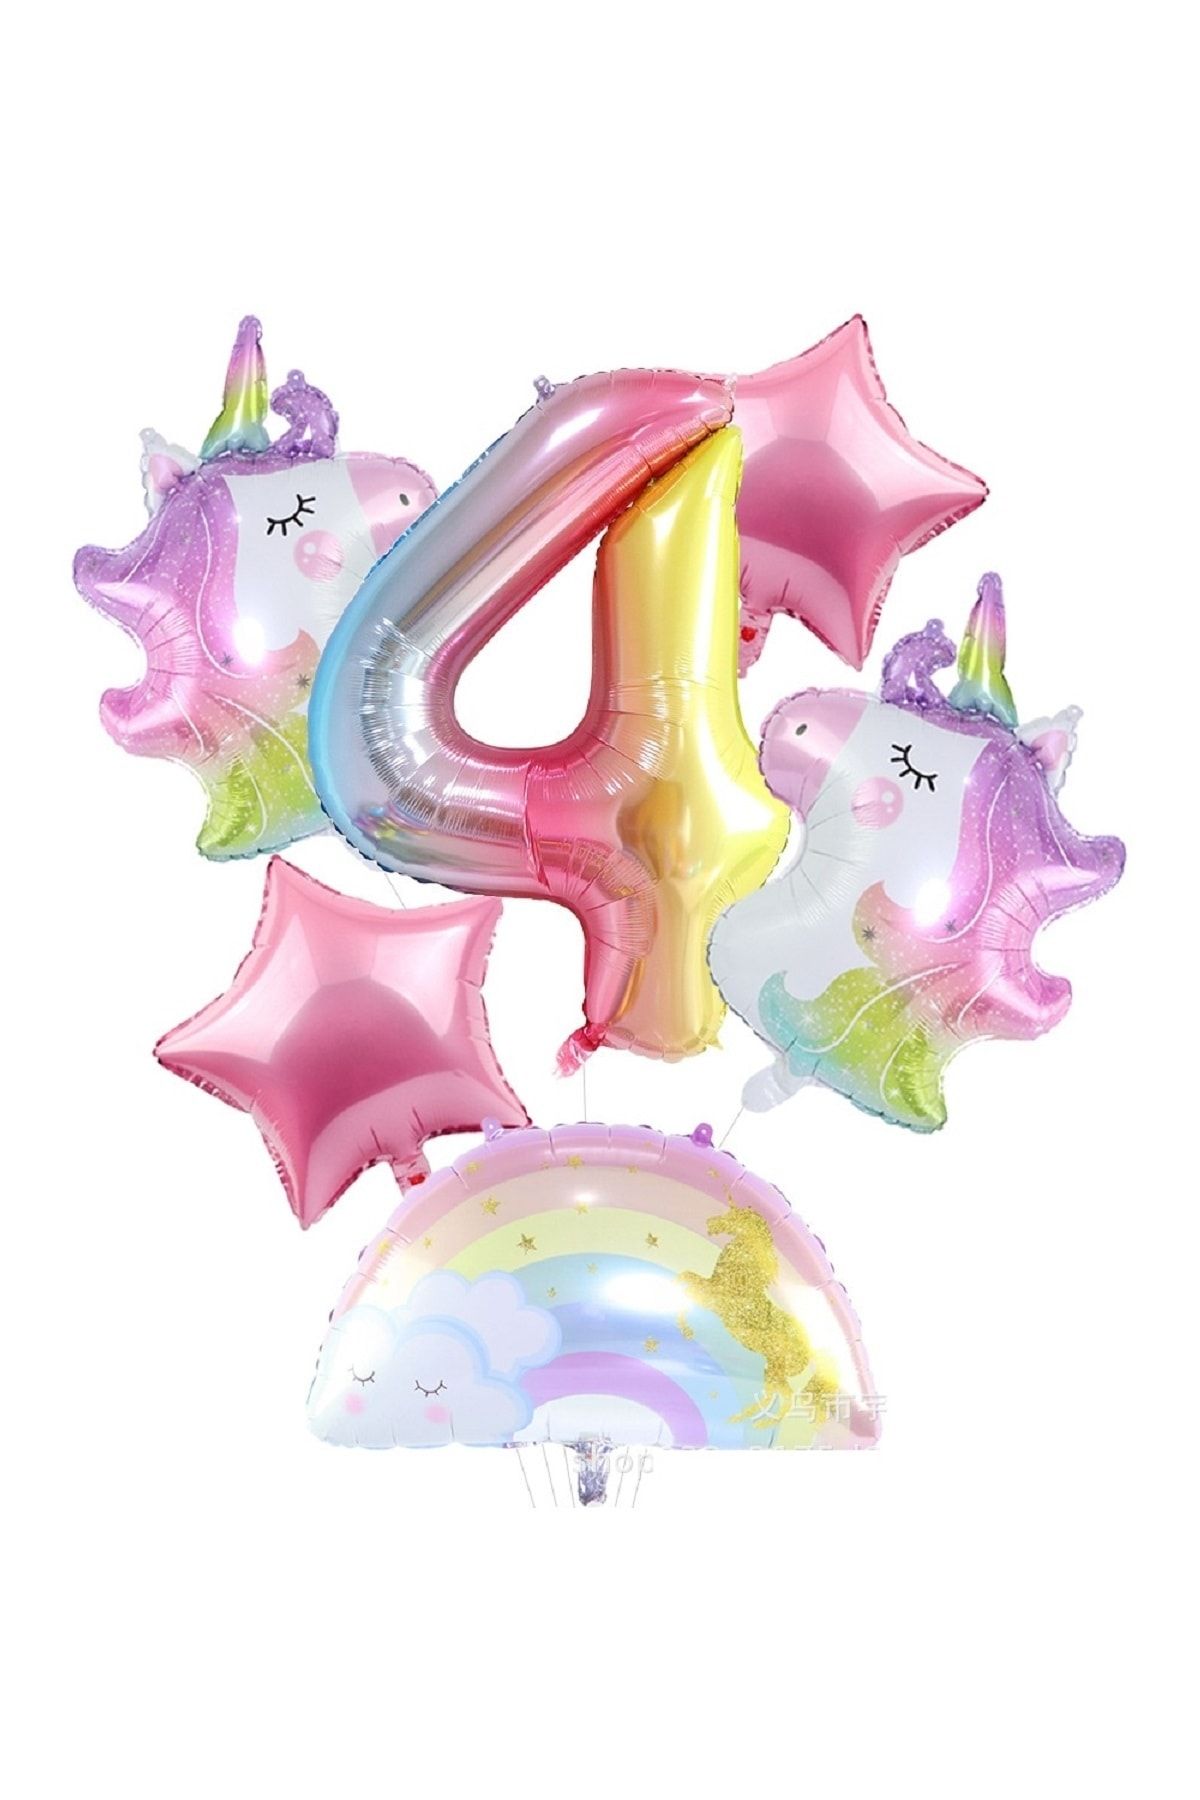 PartiMix Sevimli Unicorn Konsepti 4 Yaş Kız Çocuk Doğum Günü Parti Süsü Balon Seti Folyo Balonları